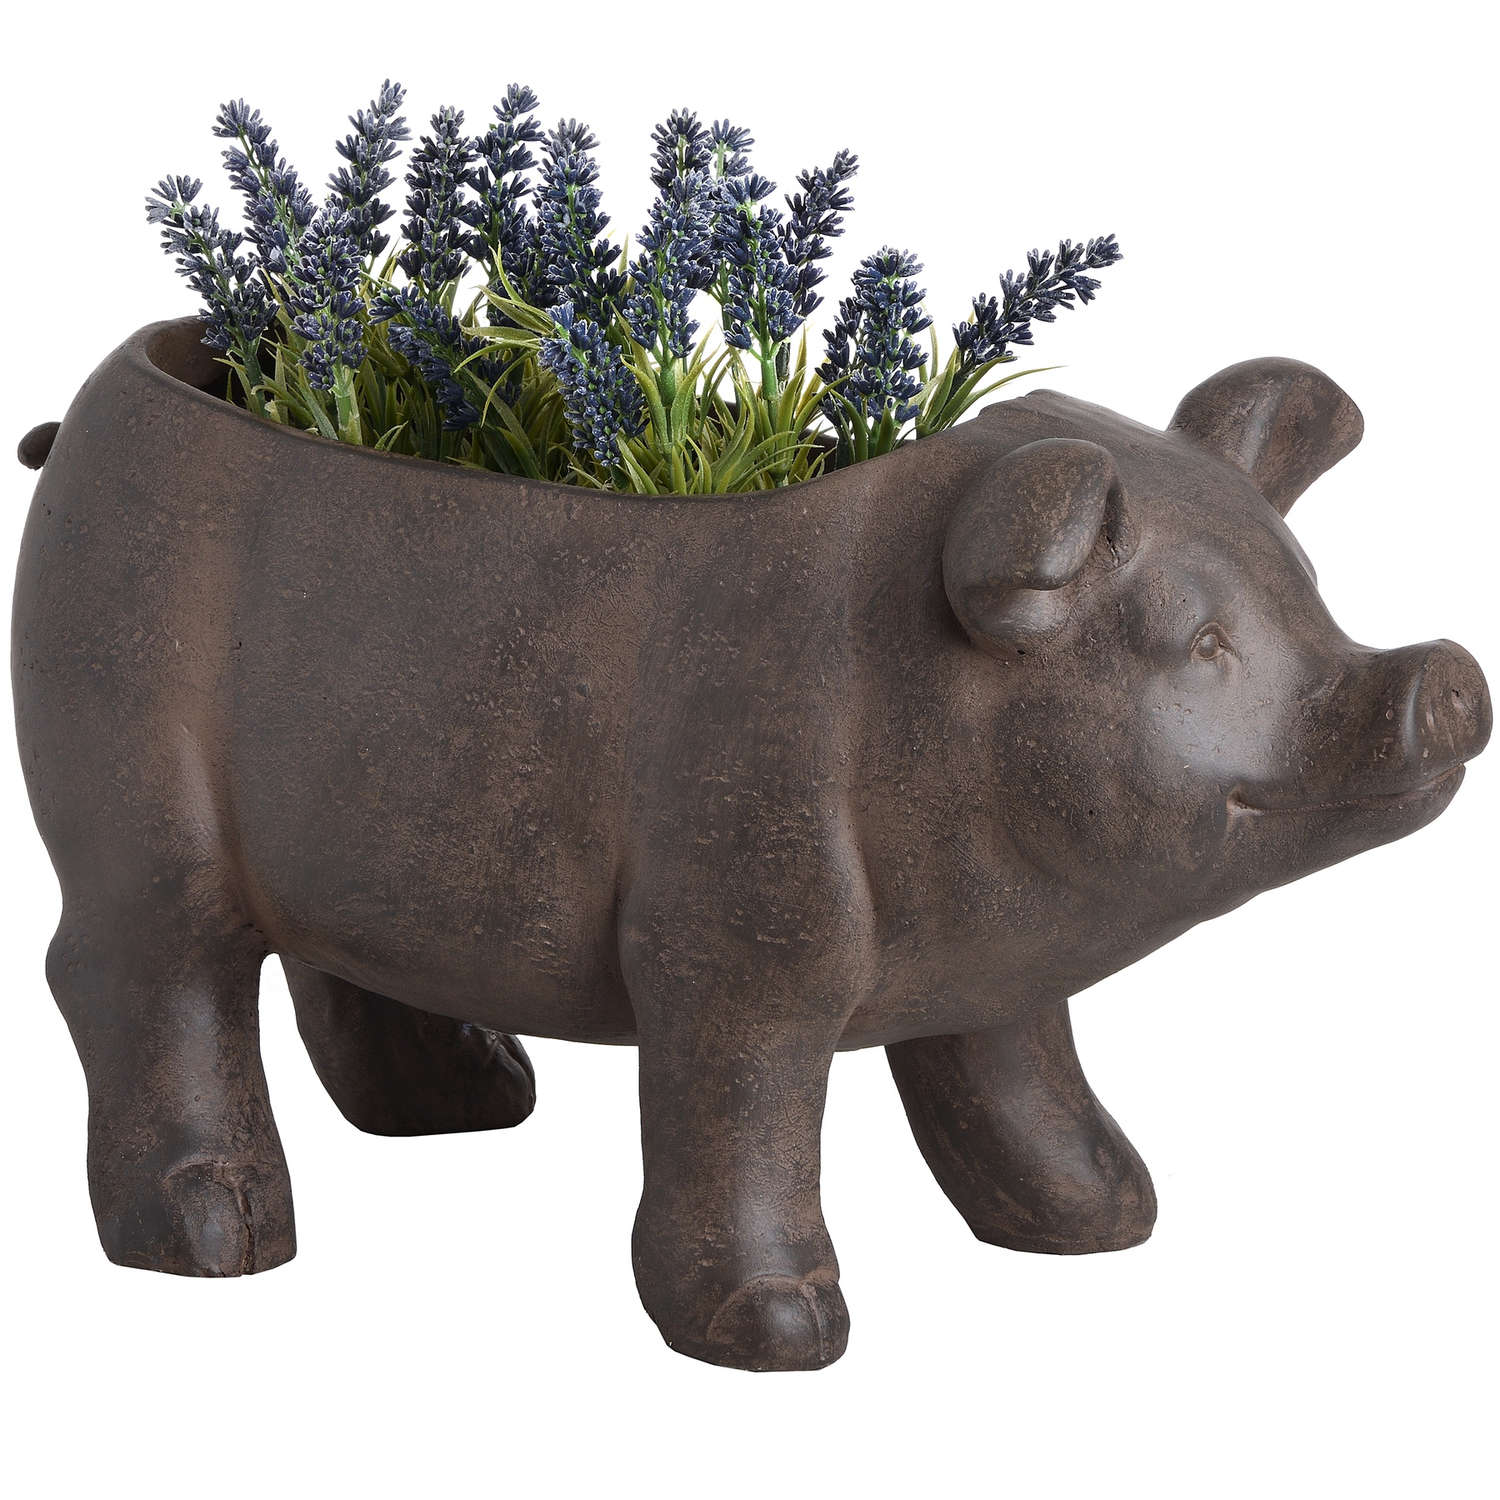 Rustic Pig Planter - Image 1